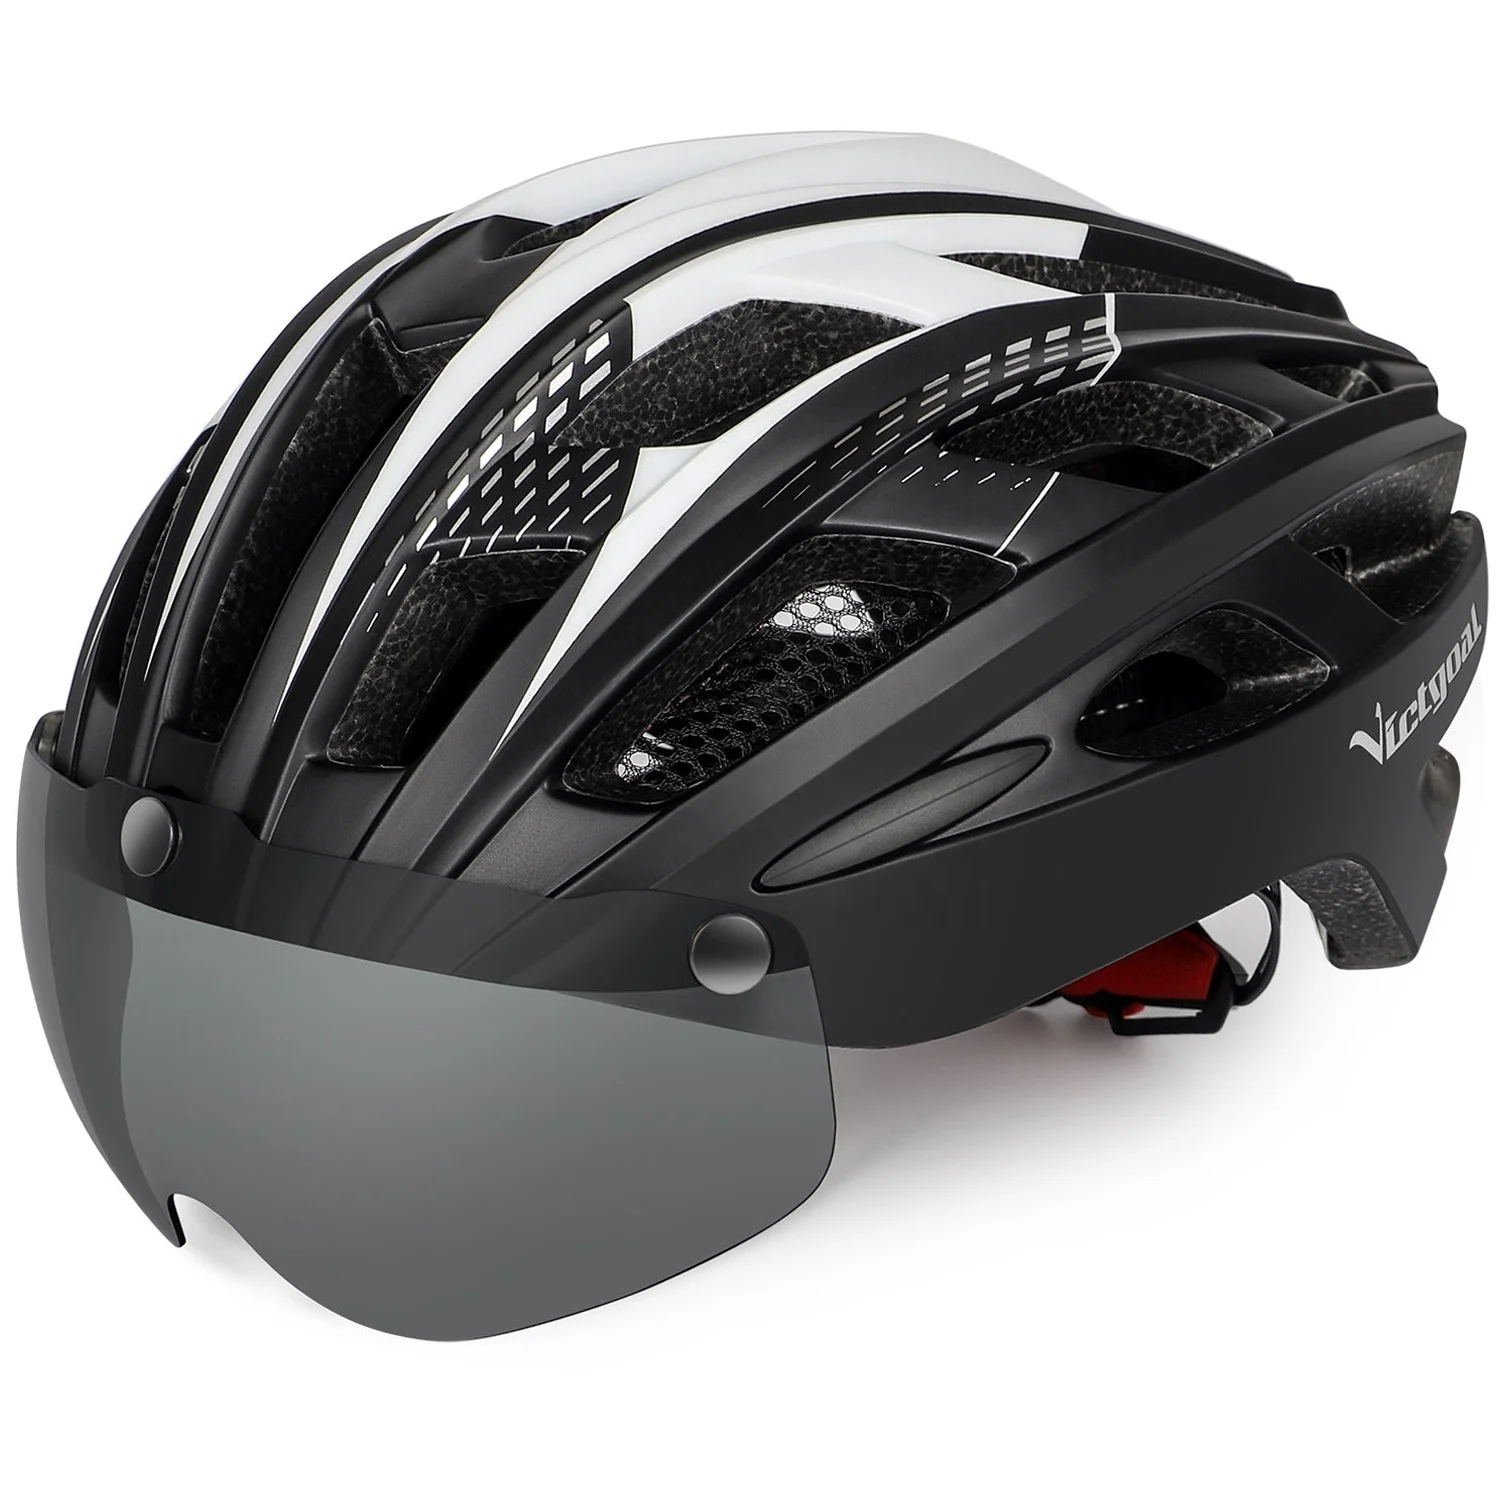 Helmet Cycling Bike Ultralight MTB Visor Light LED security VICTGOAL 